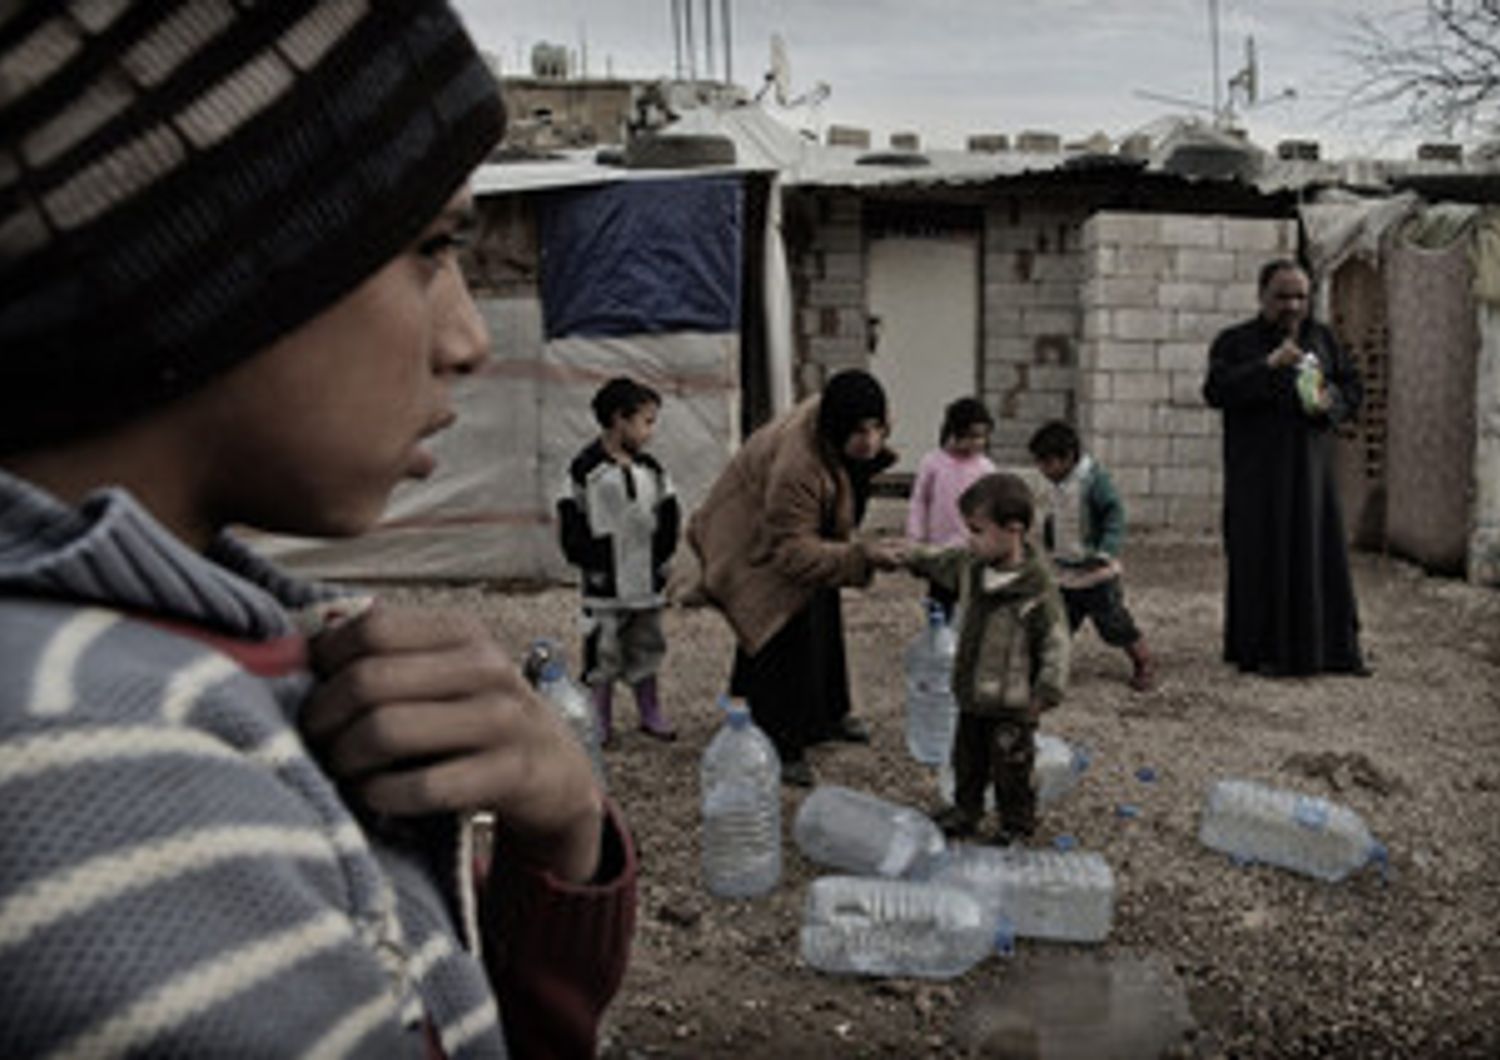 &nbsp;Libano - rifugiati bambini poverta' (Oxfam)